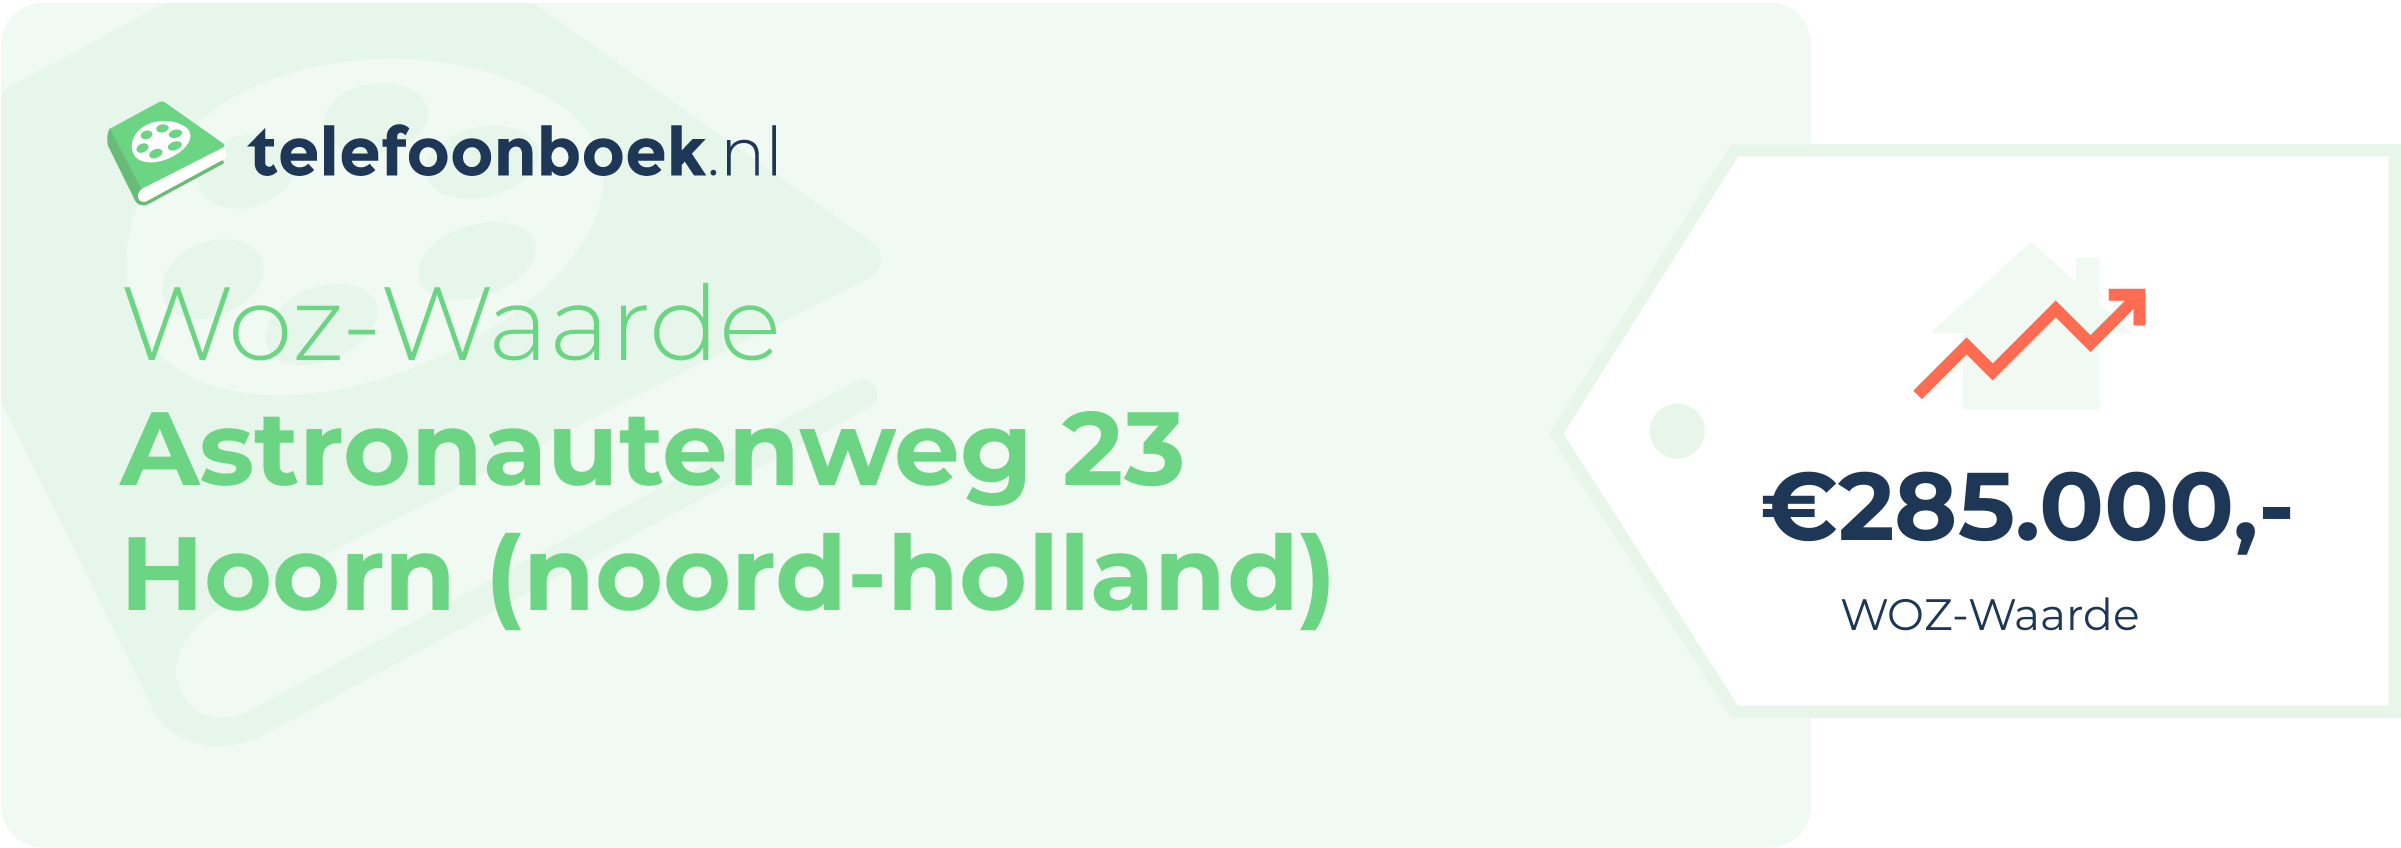 WOZ-waarde Astronautenweg 23 Hoorn (Noord-Holland)